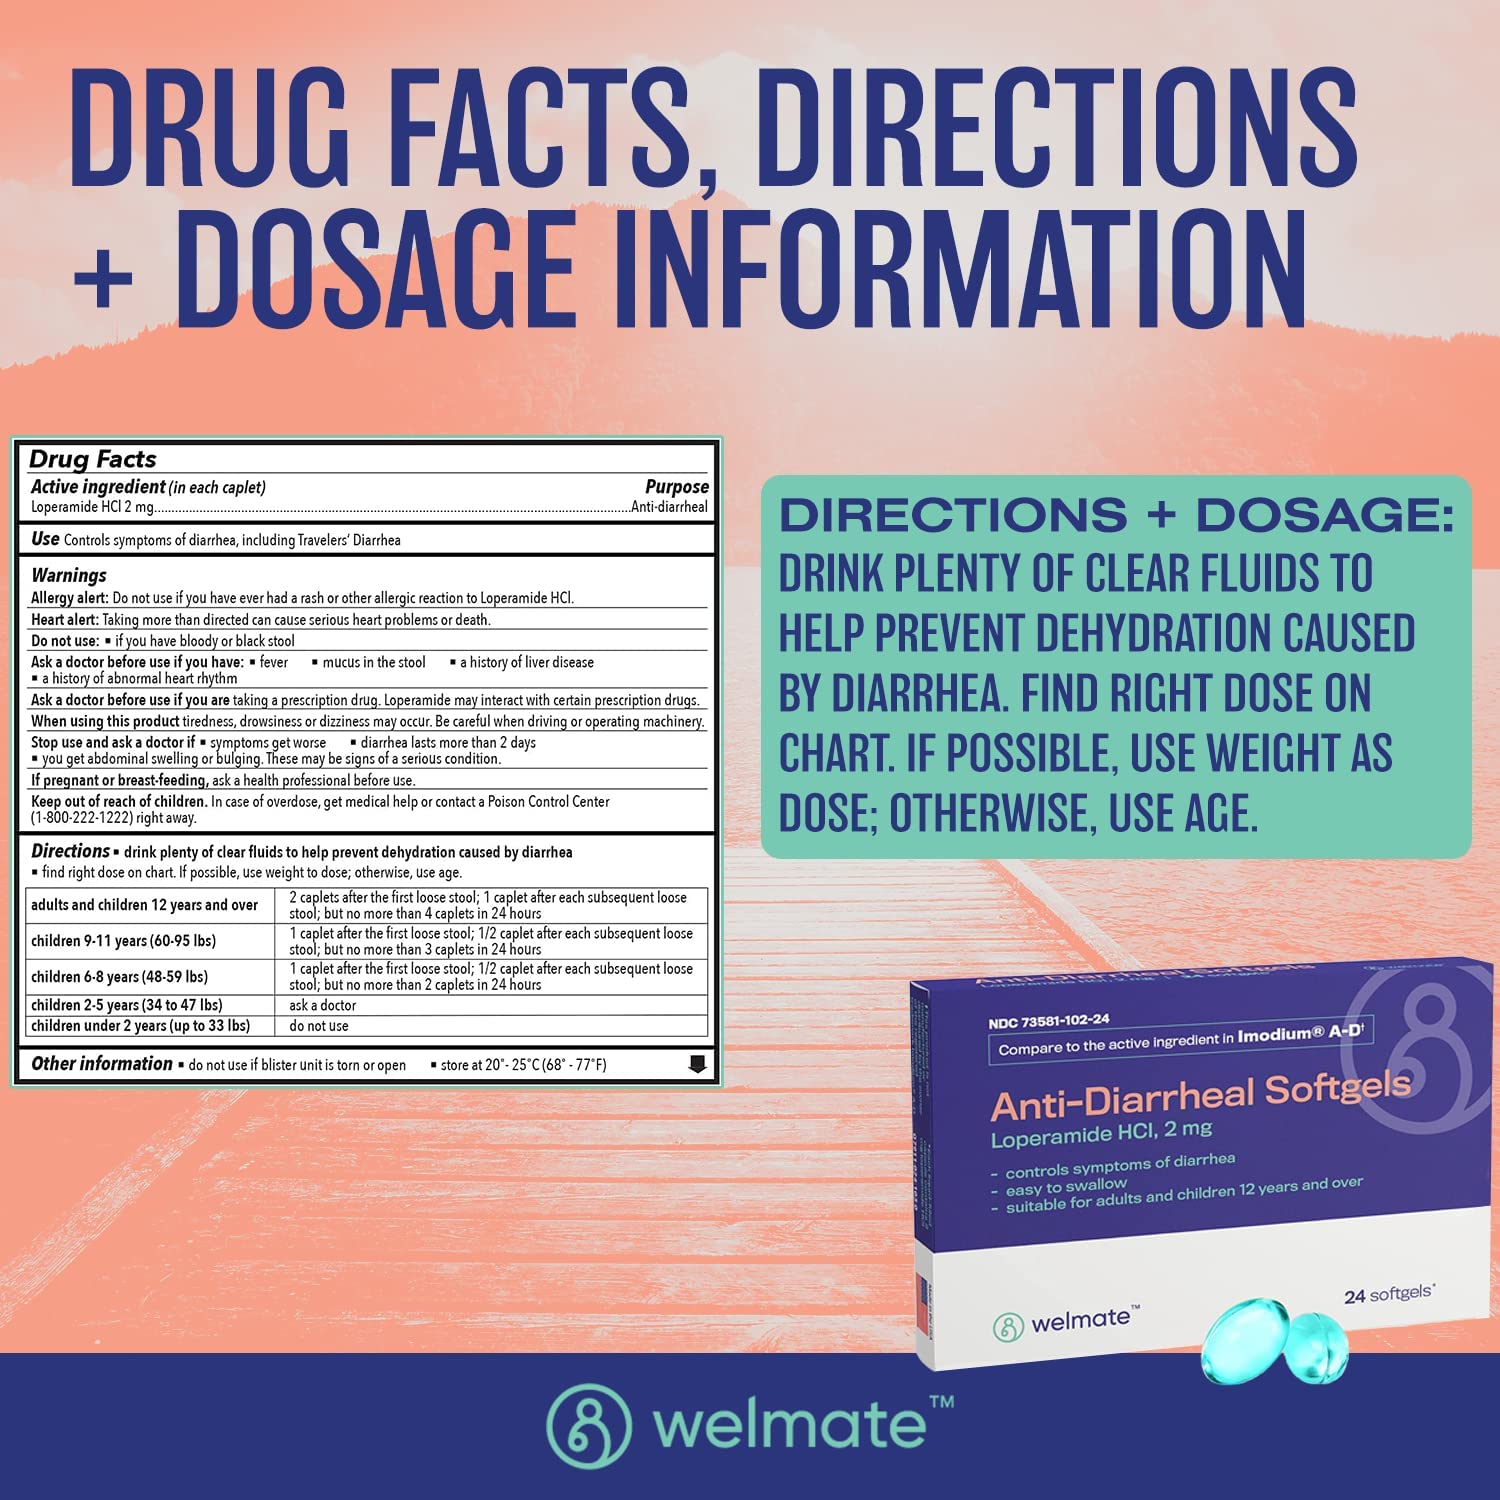 Welmate Anti-Diarrheal Sotfgels - Loperamide HCL 2 mg - Diarrhea Relief - 24 Count Blister Pack - image 5 of 6